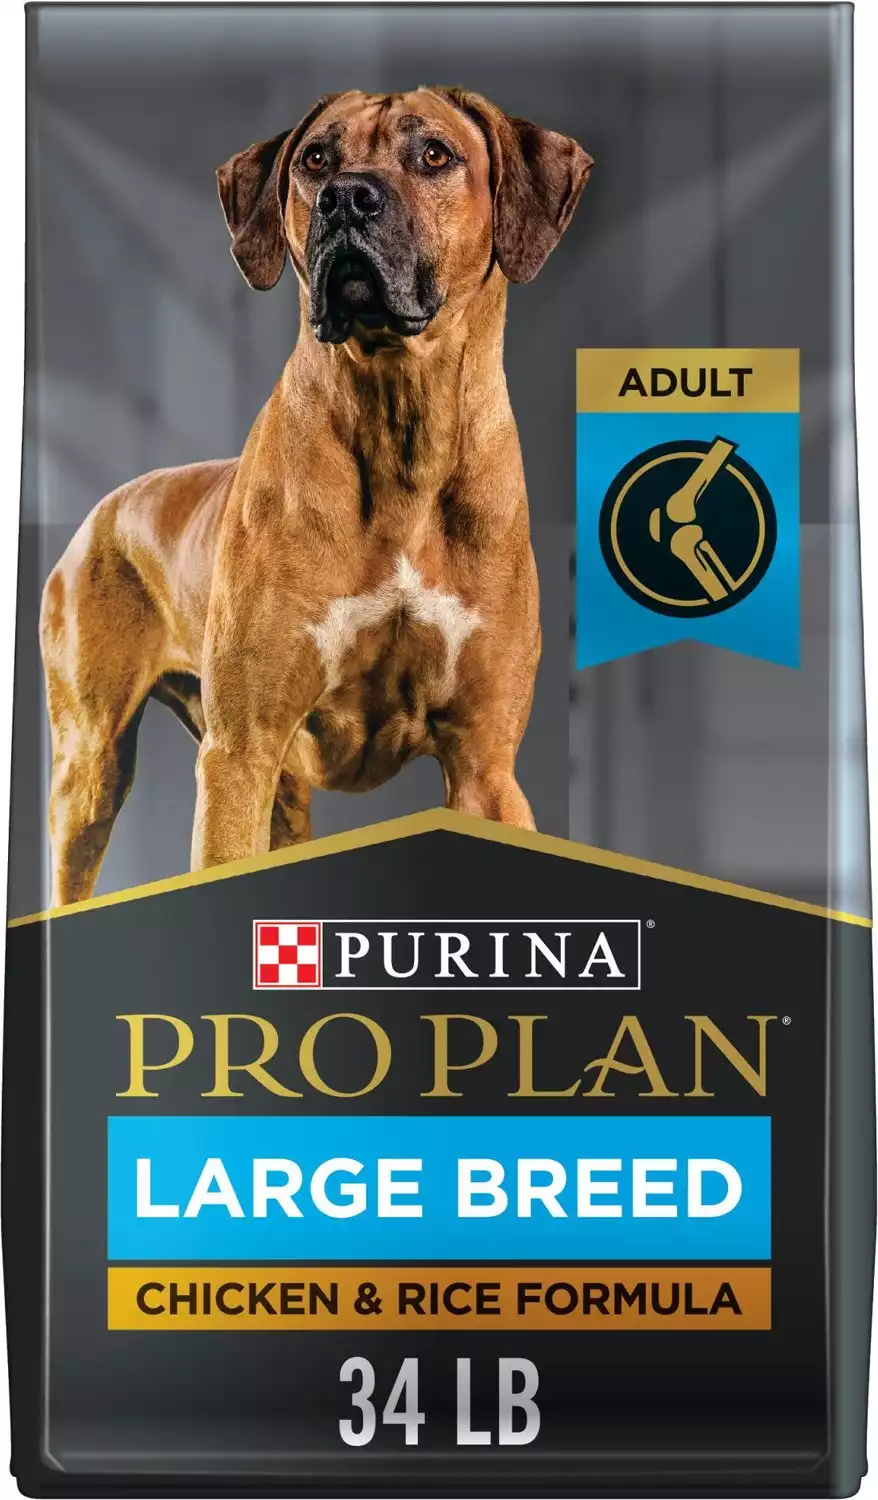 Purina Pro Plan Adult Large Breed Chicken & Rice Formula